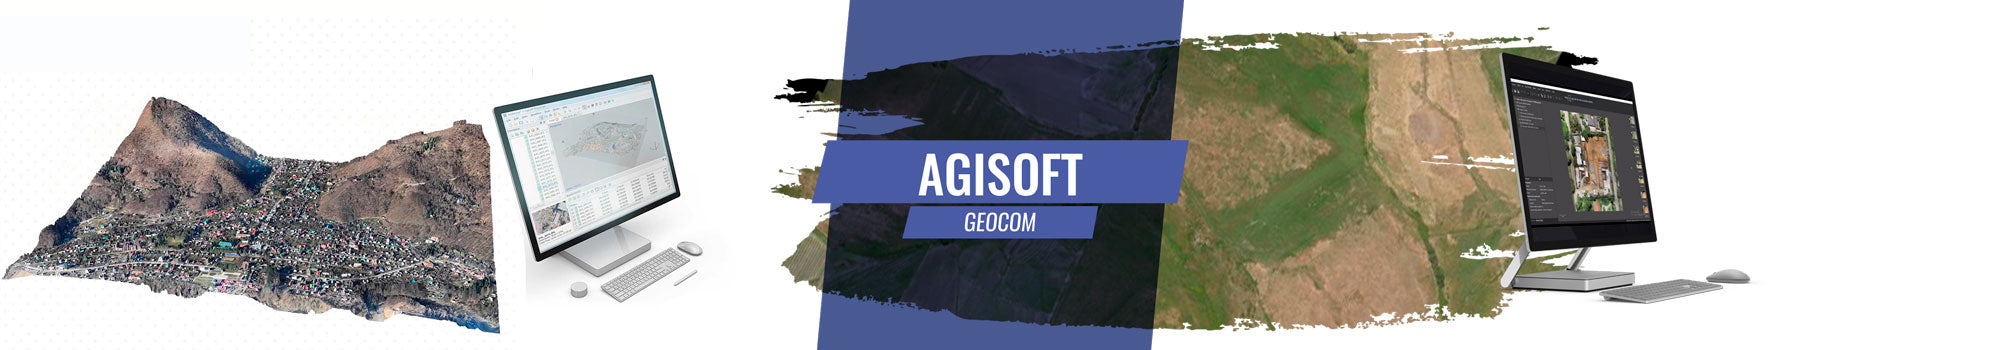 Agisoft